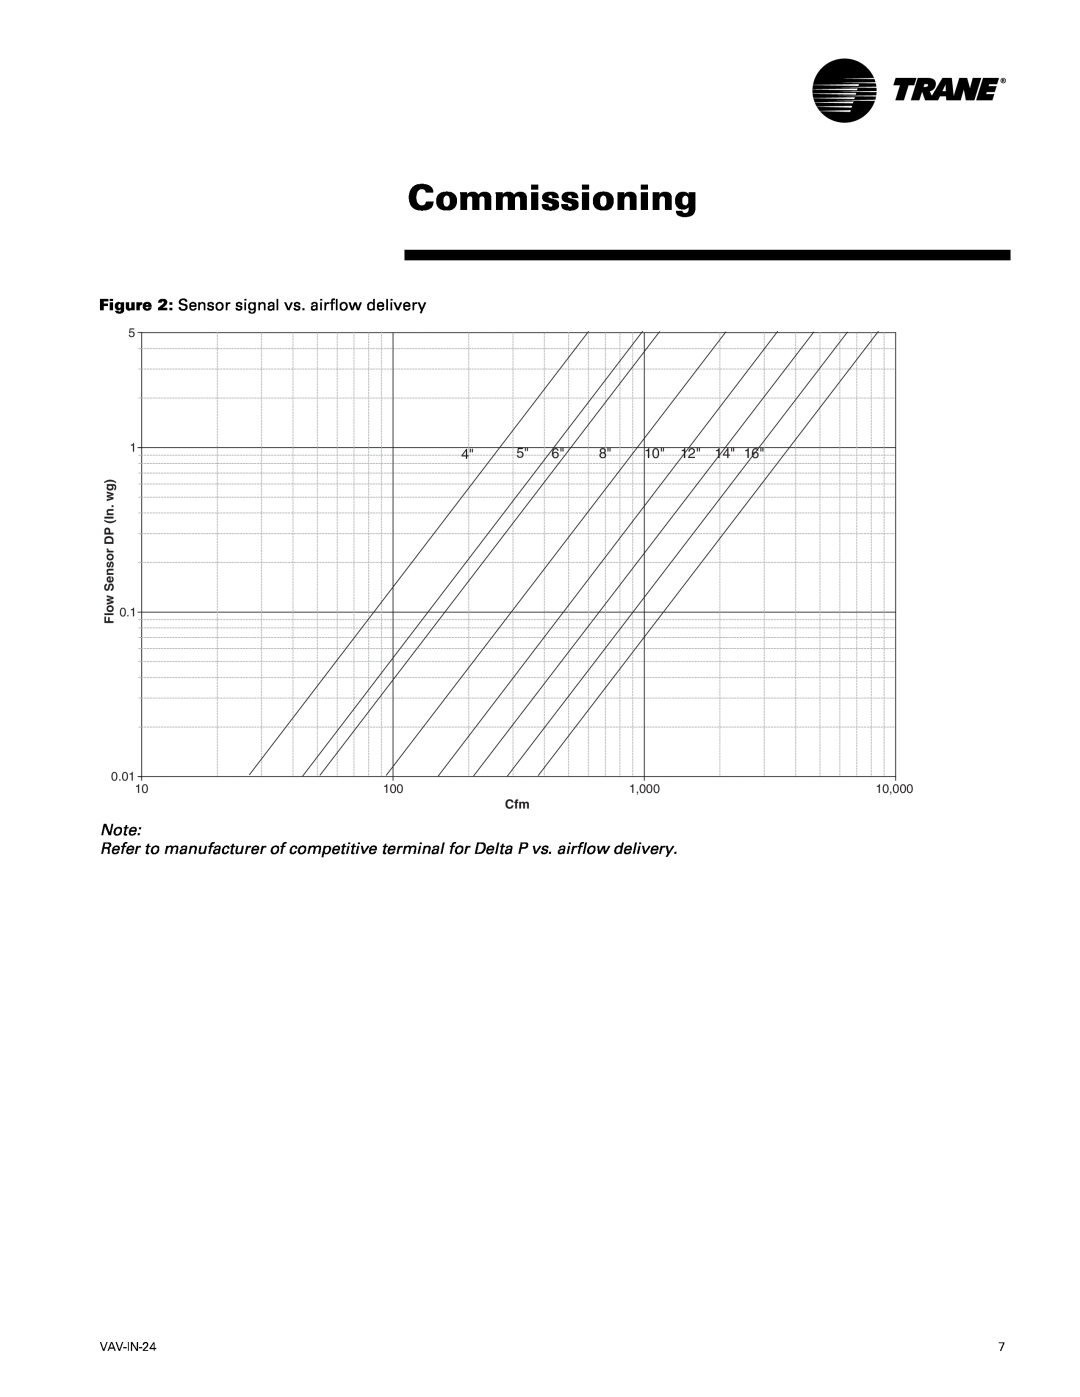 Trane Unit Control Module (UCM) 4.2 Retrofit Model VAV manual Commissioning, Sensor DP In. wg, Flow, 0.01, 1,000, 10,000 